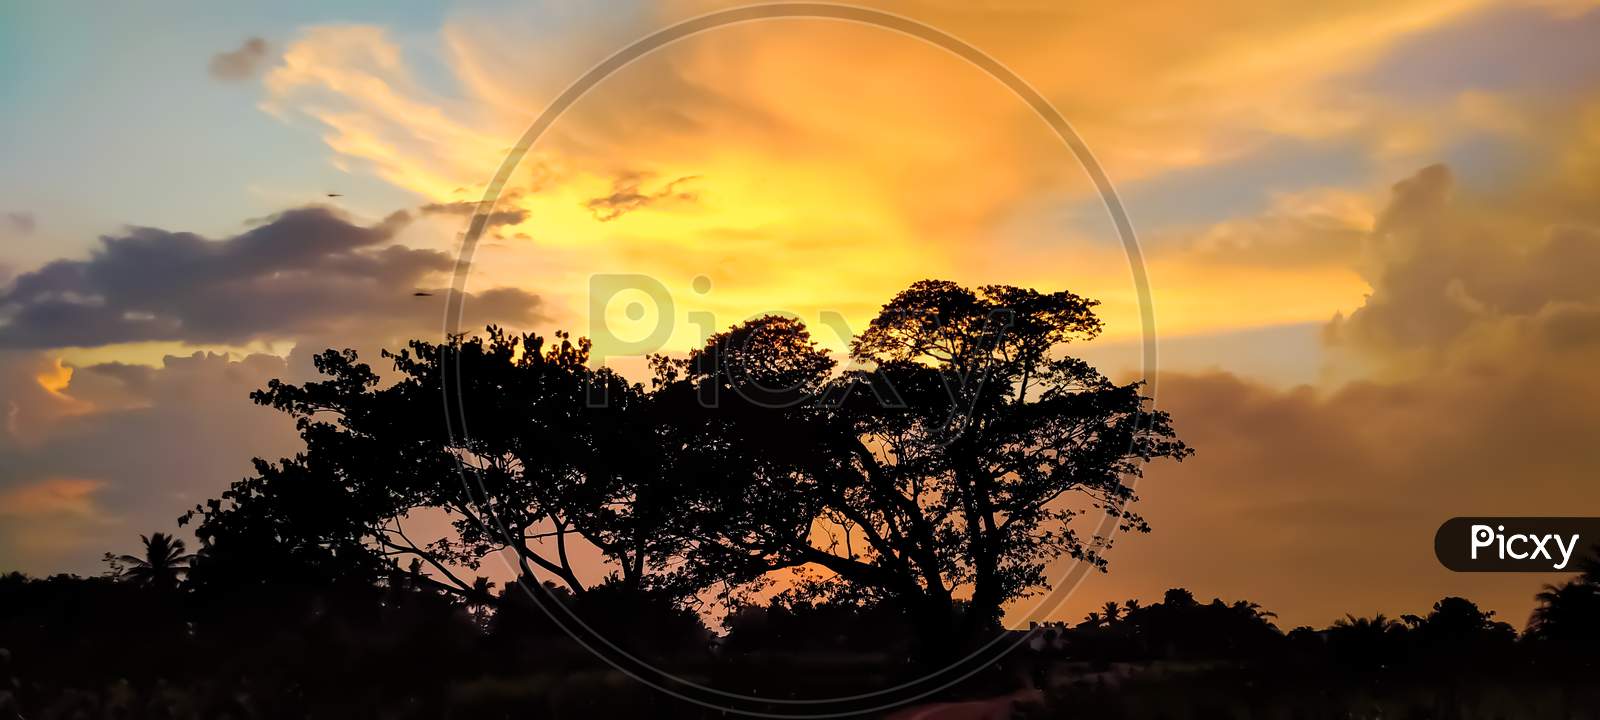 evening nature wallpaper son image sunrise sky tree